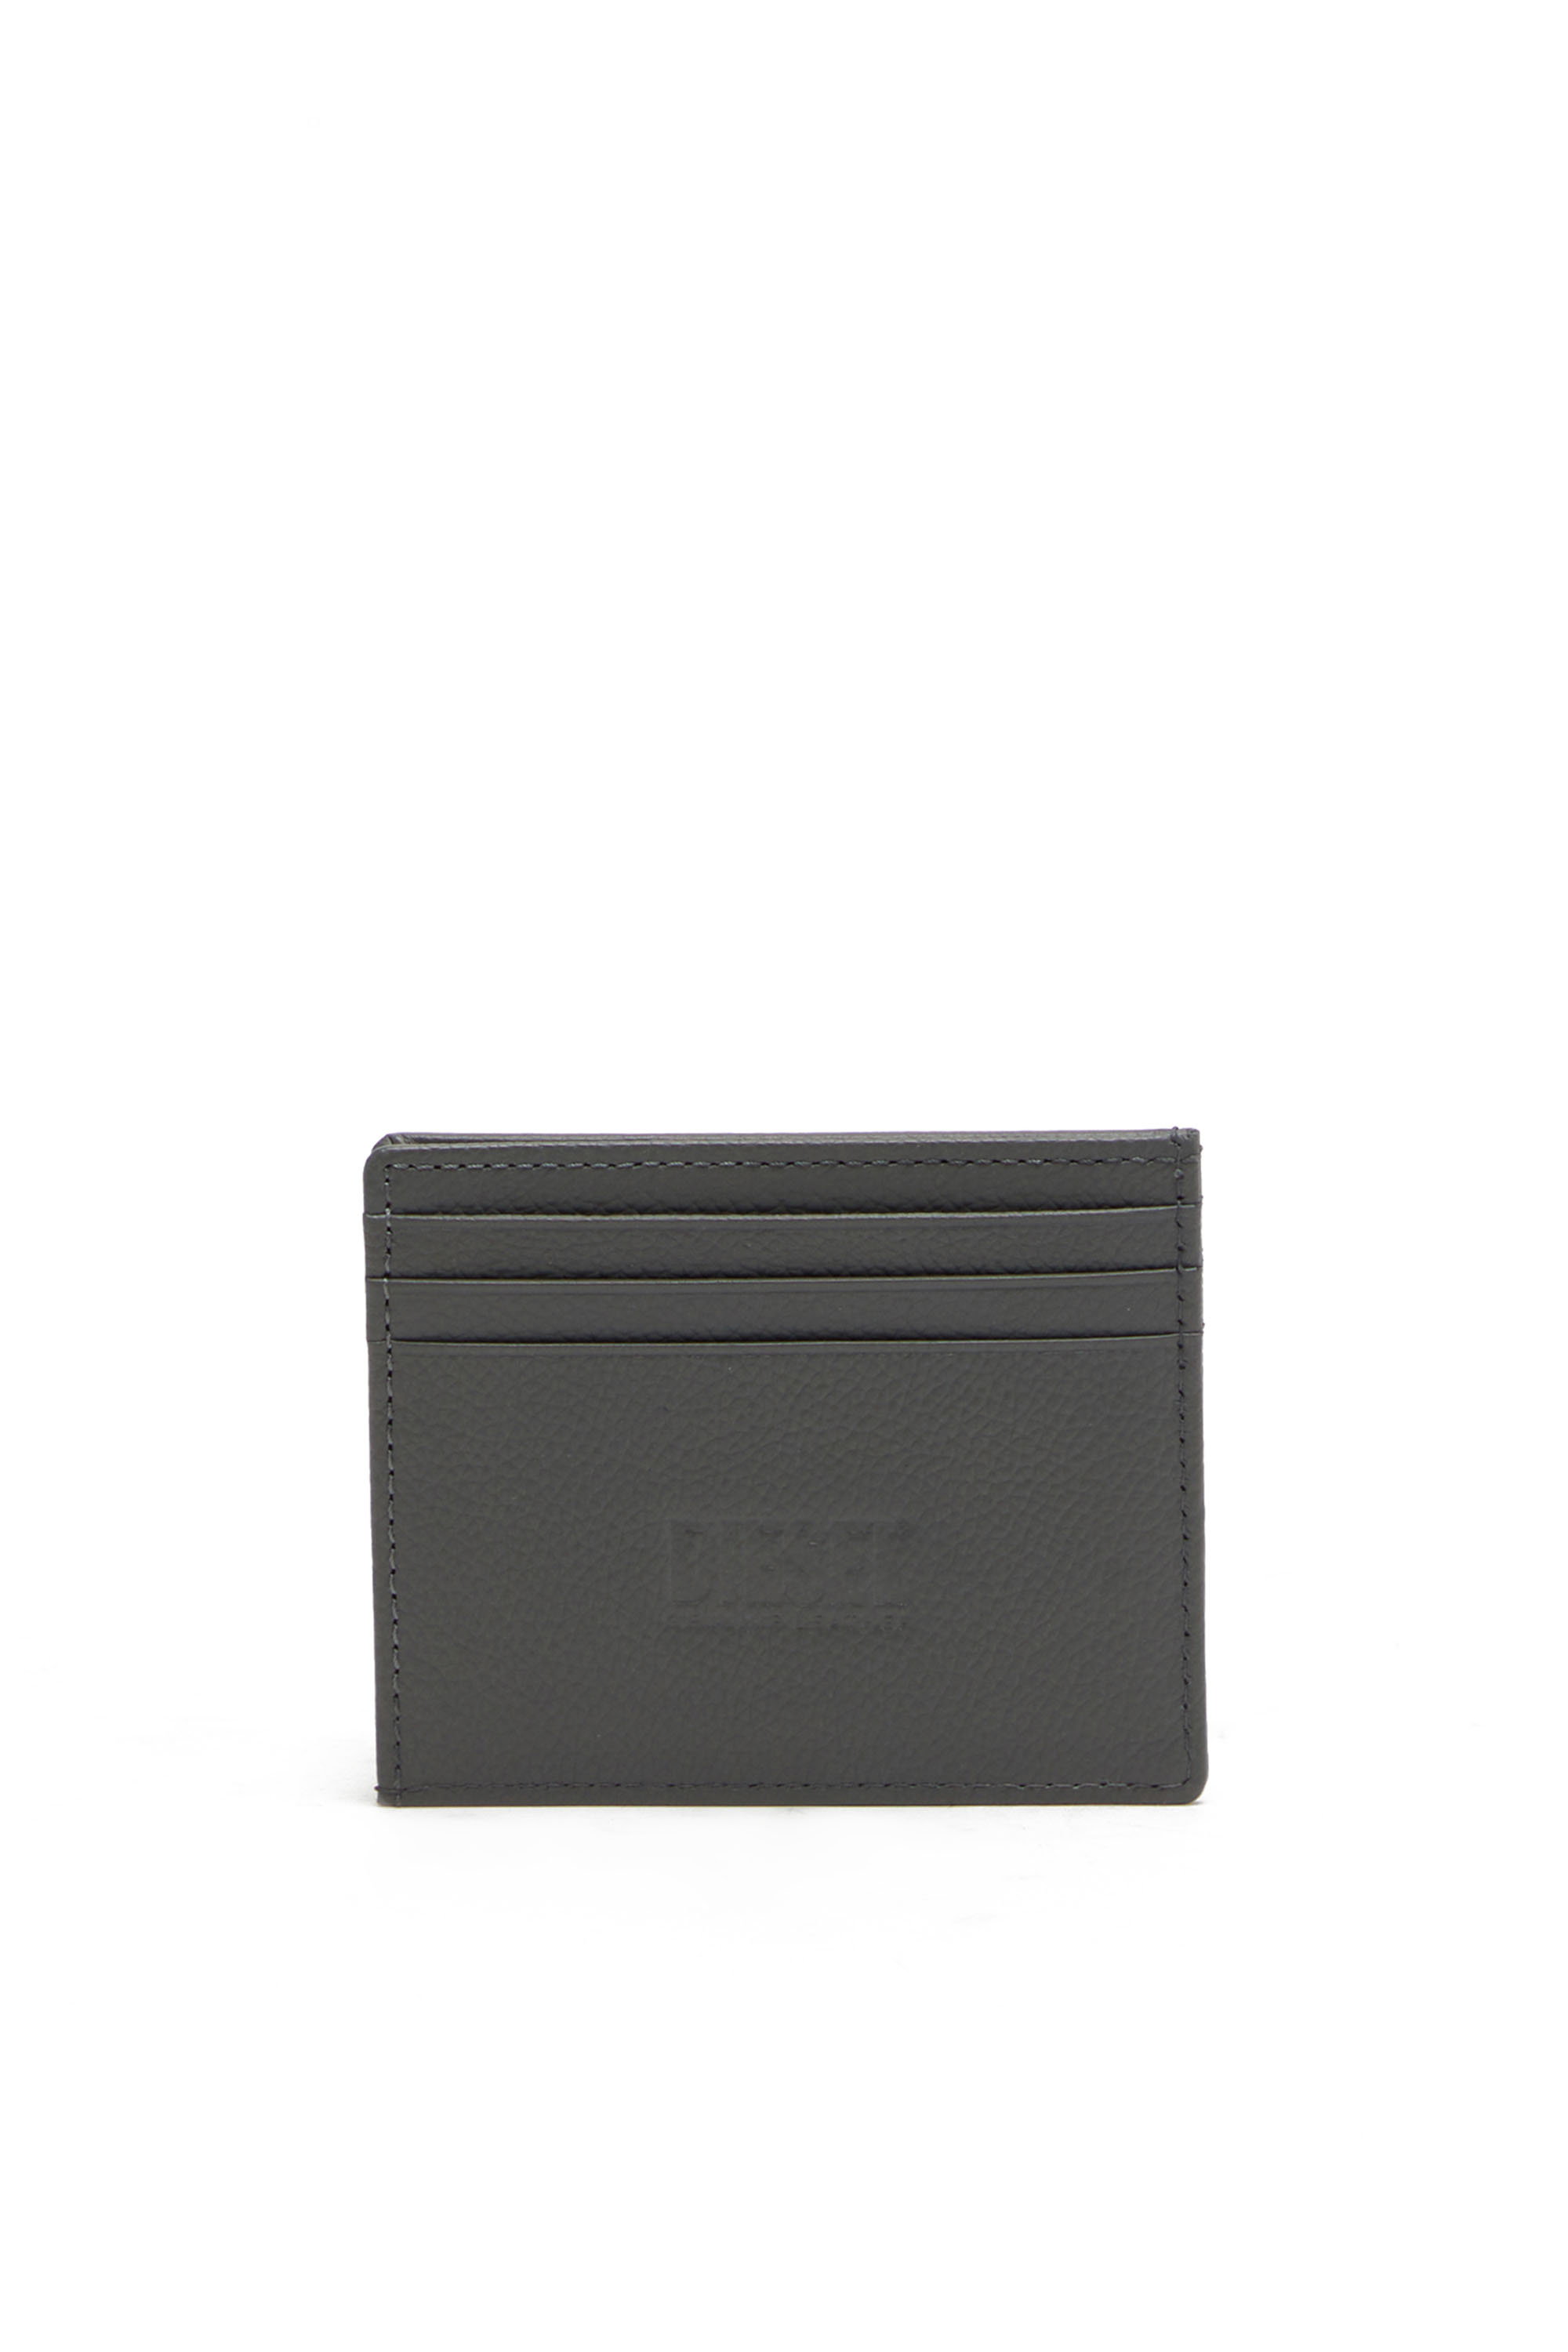 Diesel - CARD CASE, Dark grey - Image 2